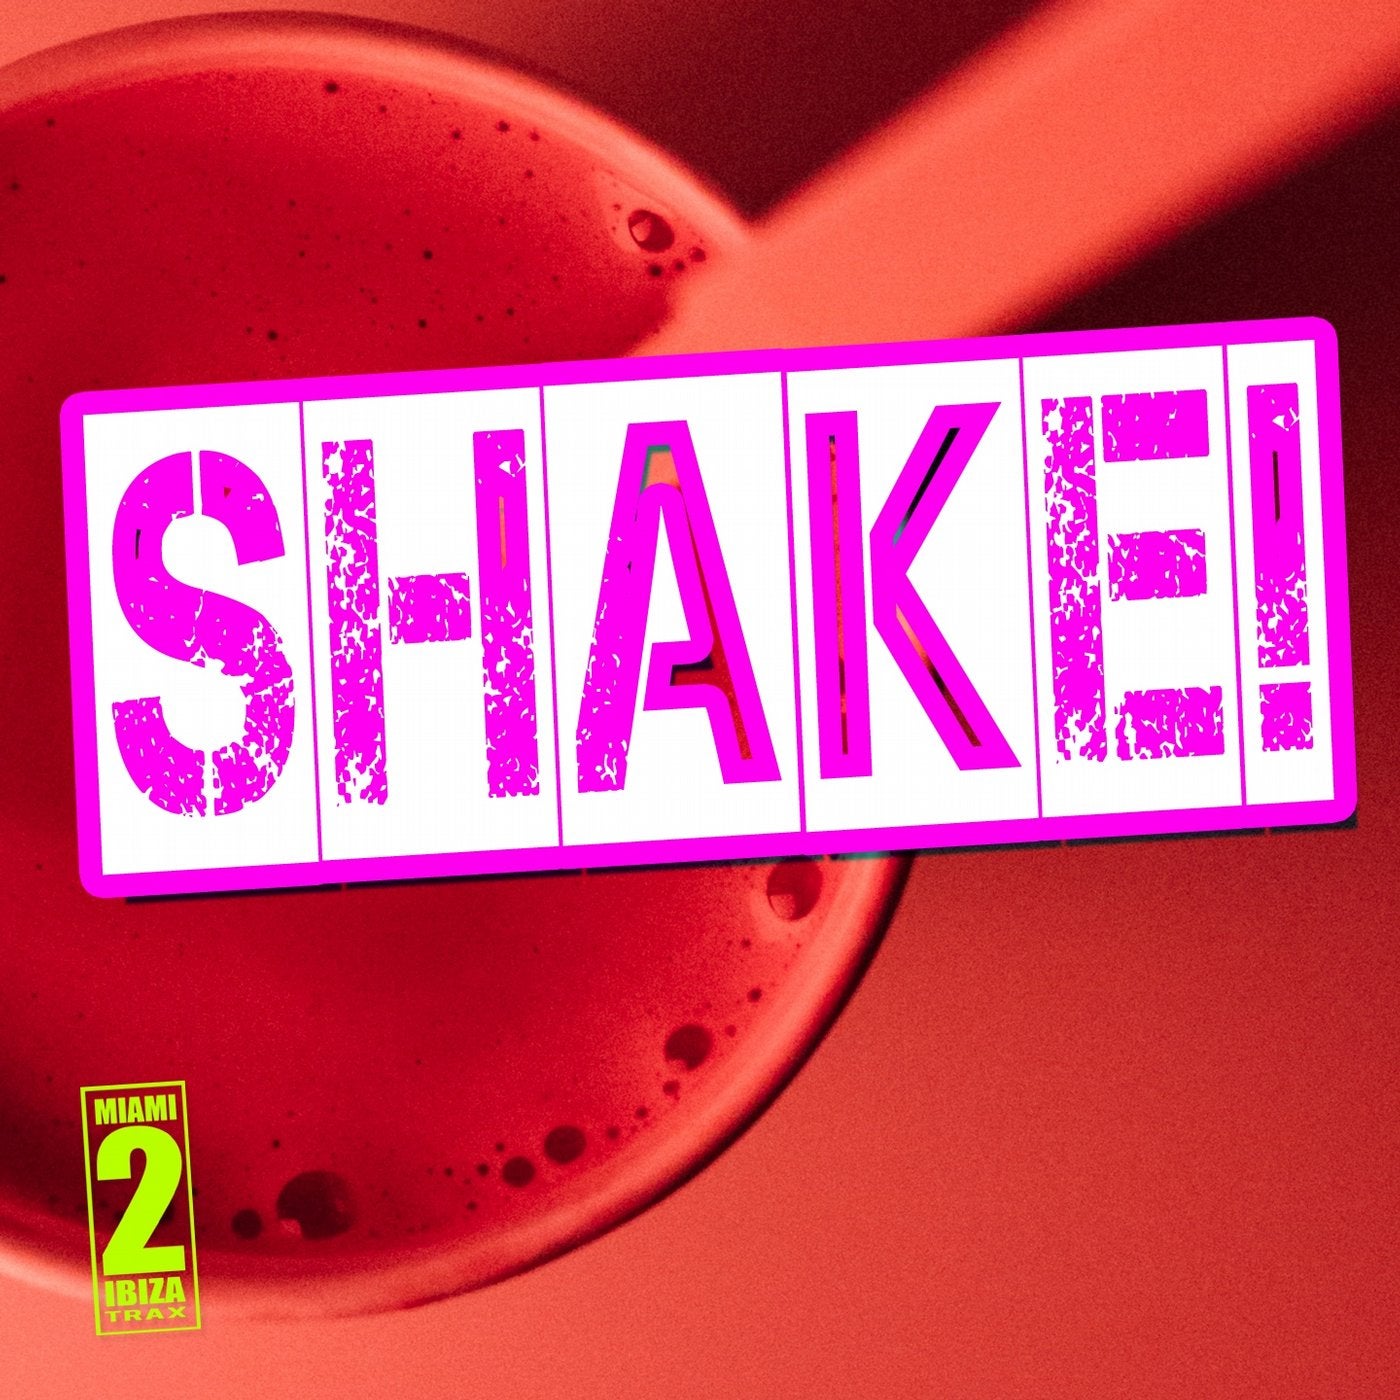 Shake!